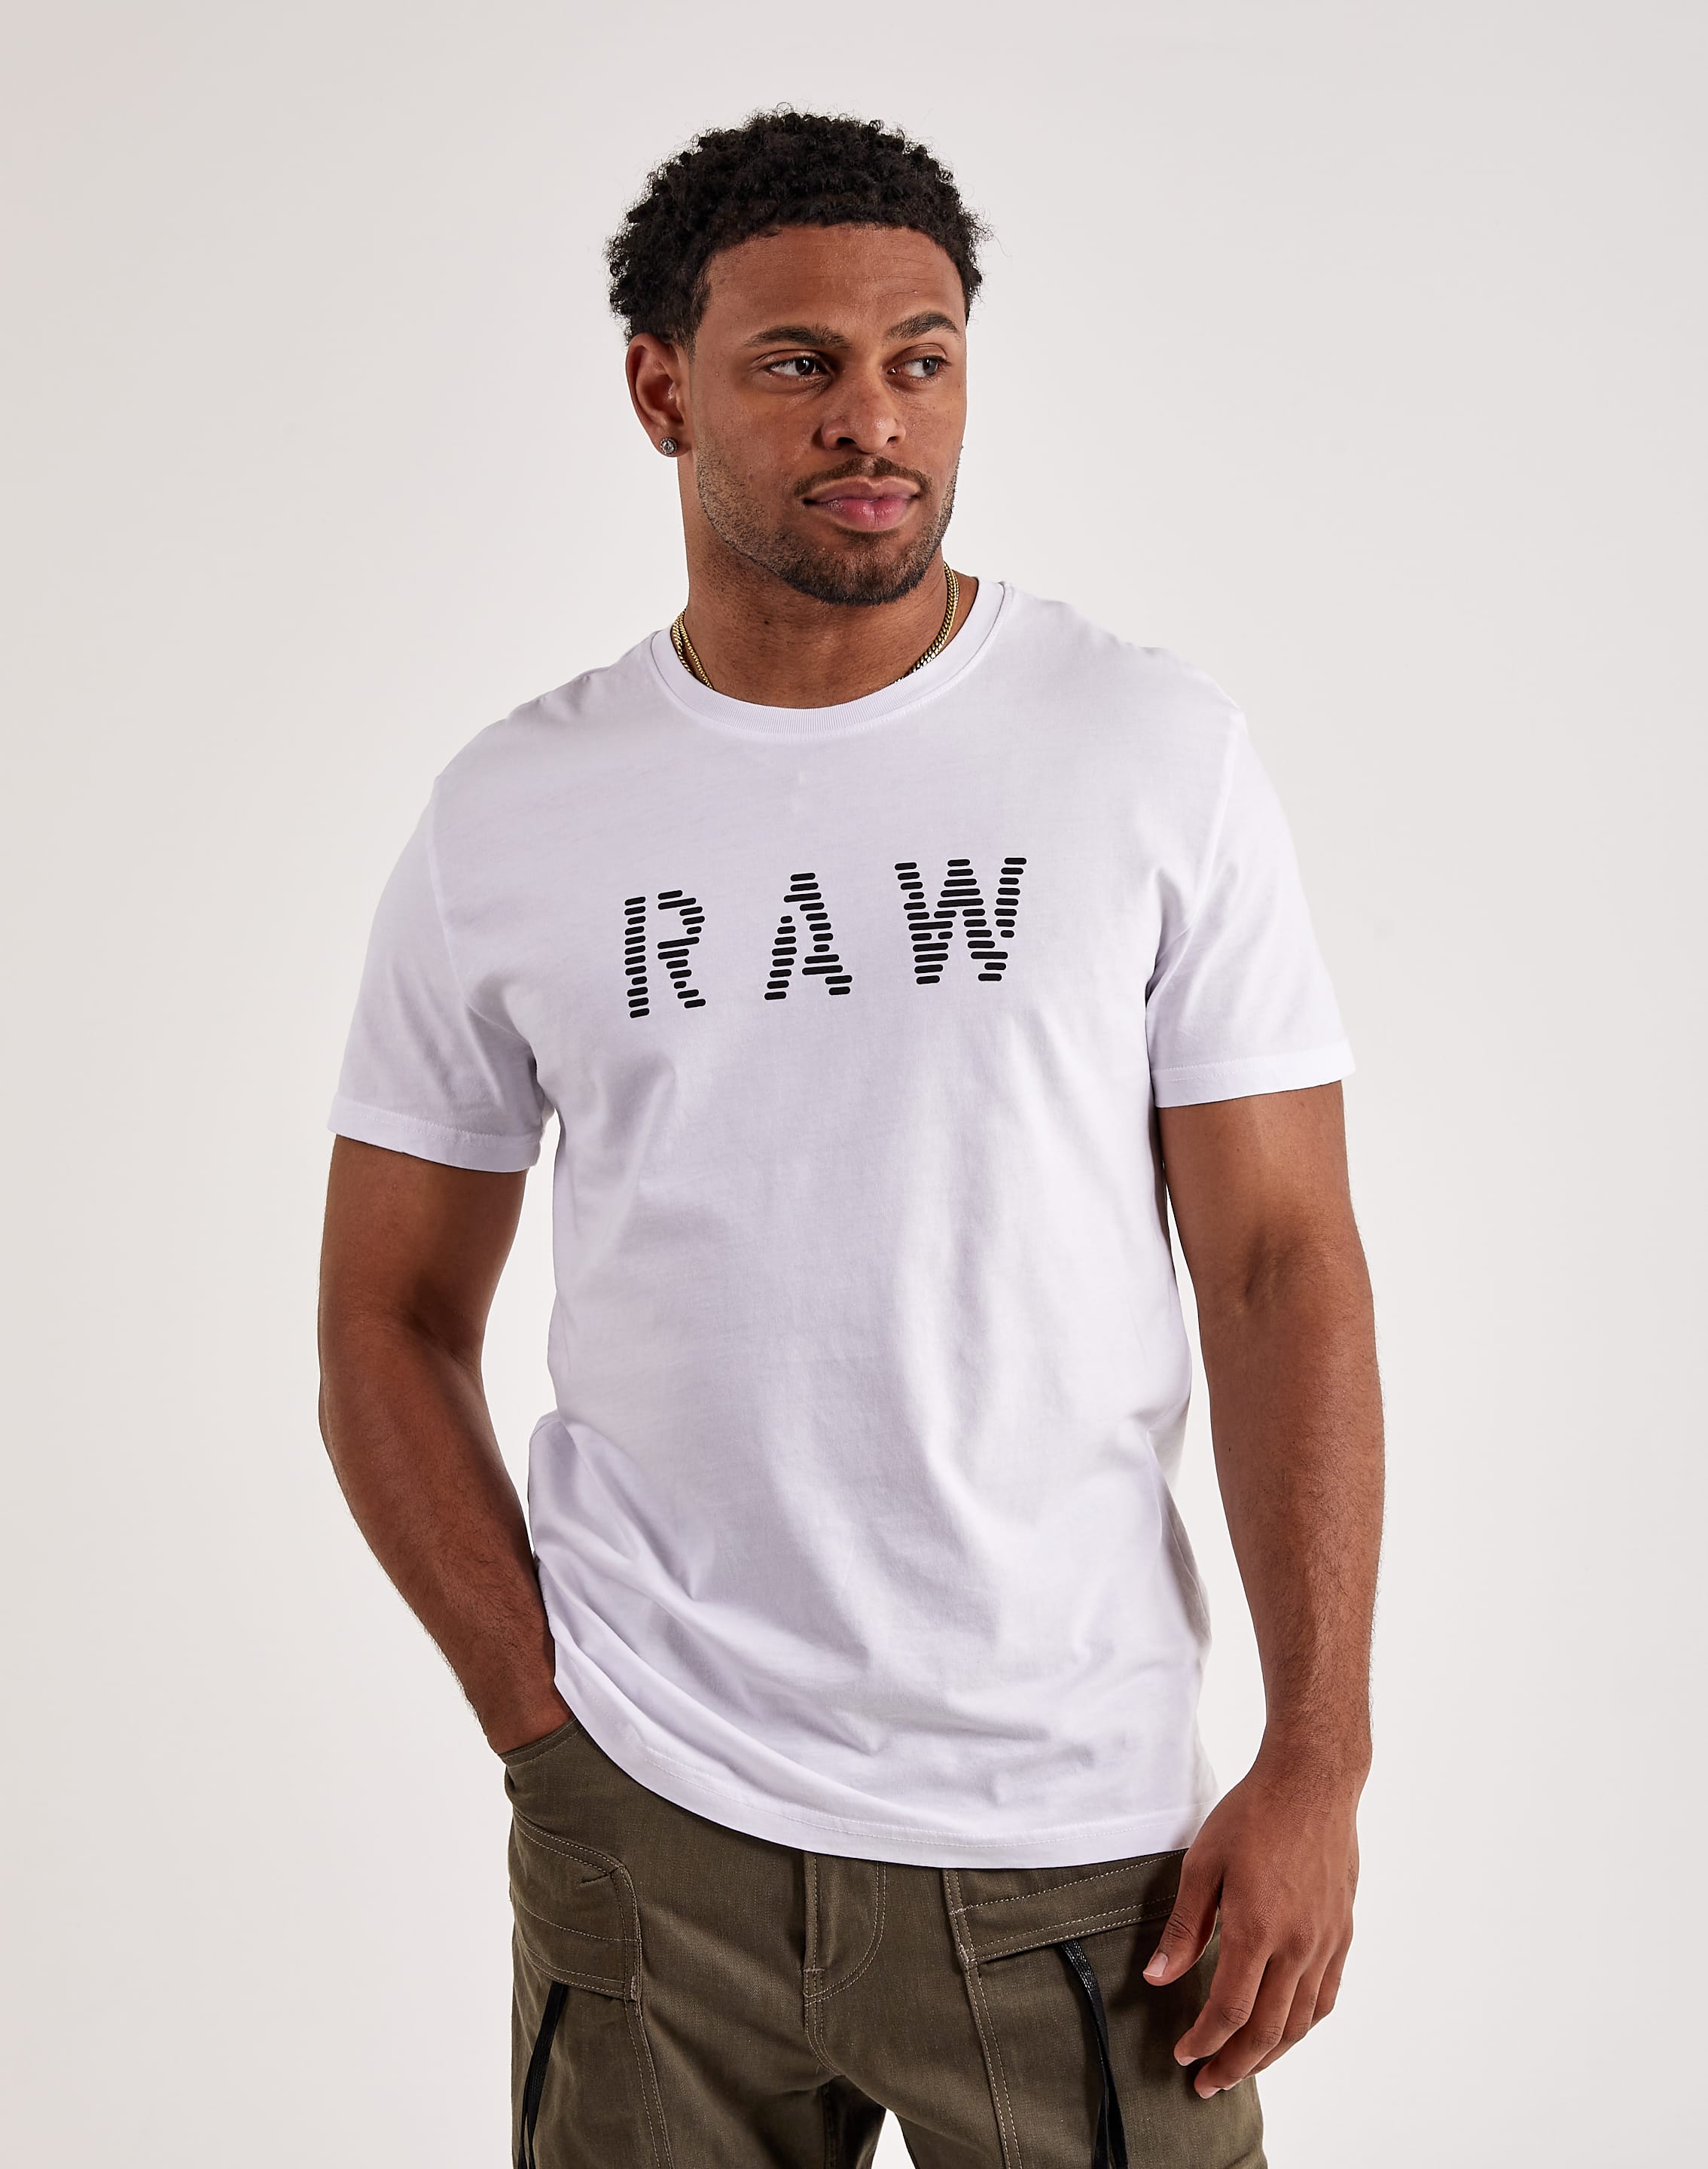 G-STAR RAW Men's Holorn Graphic Crew Neck Short Sleeve T-Shirt